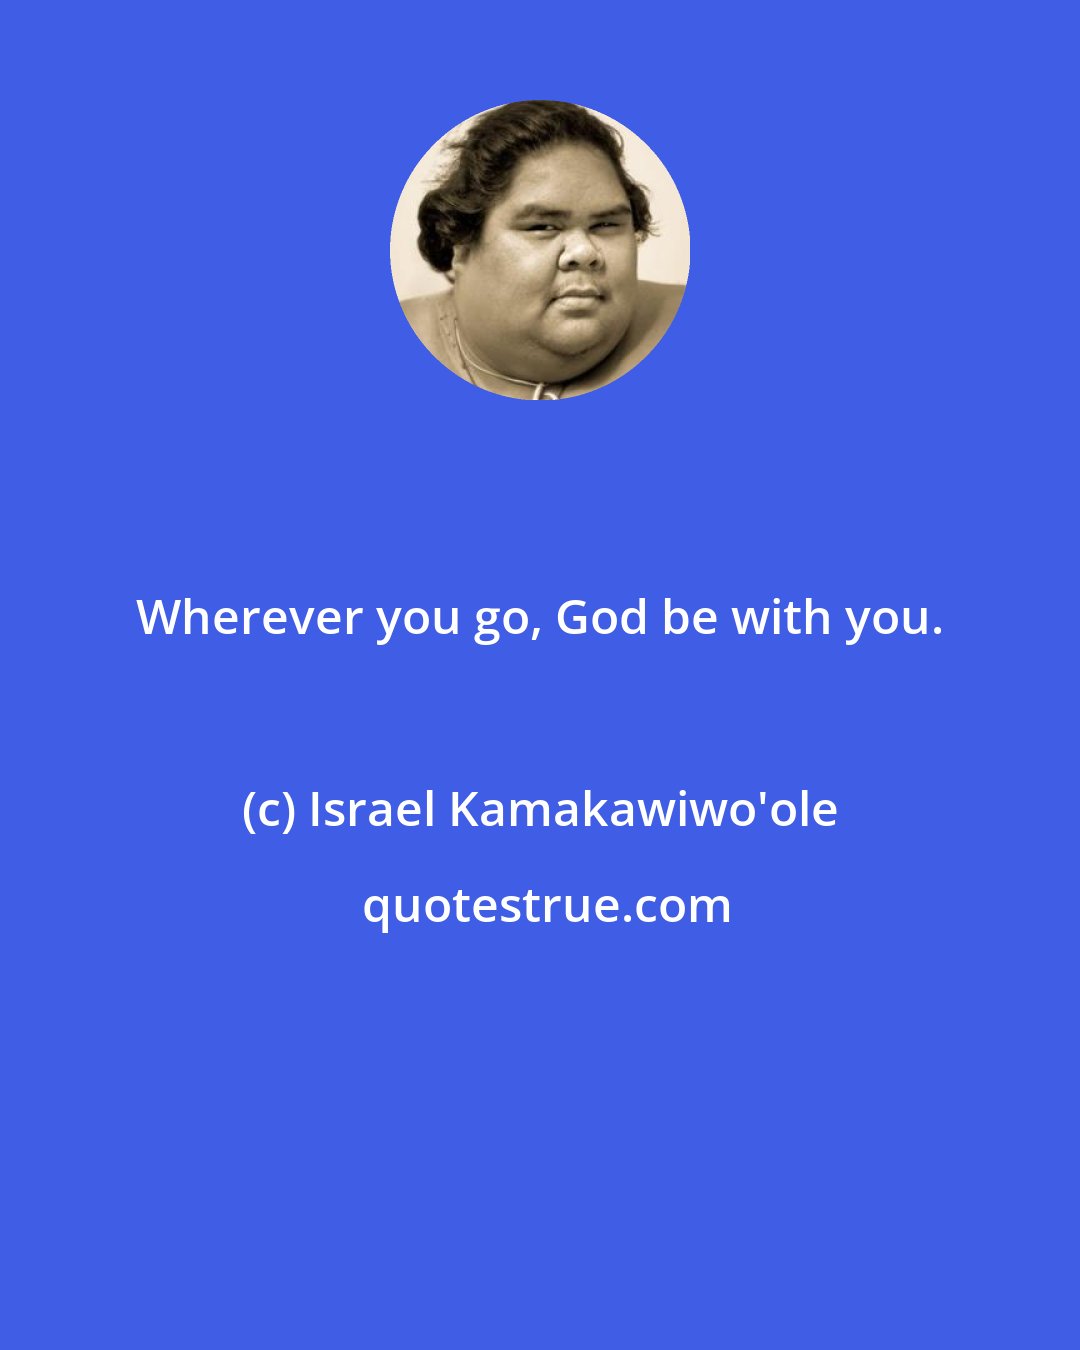 Israel Kamakawiwo'ole: Wherever you go, God be with you.